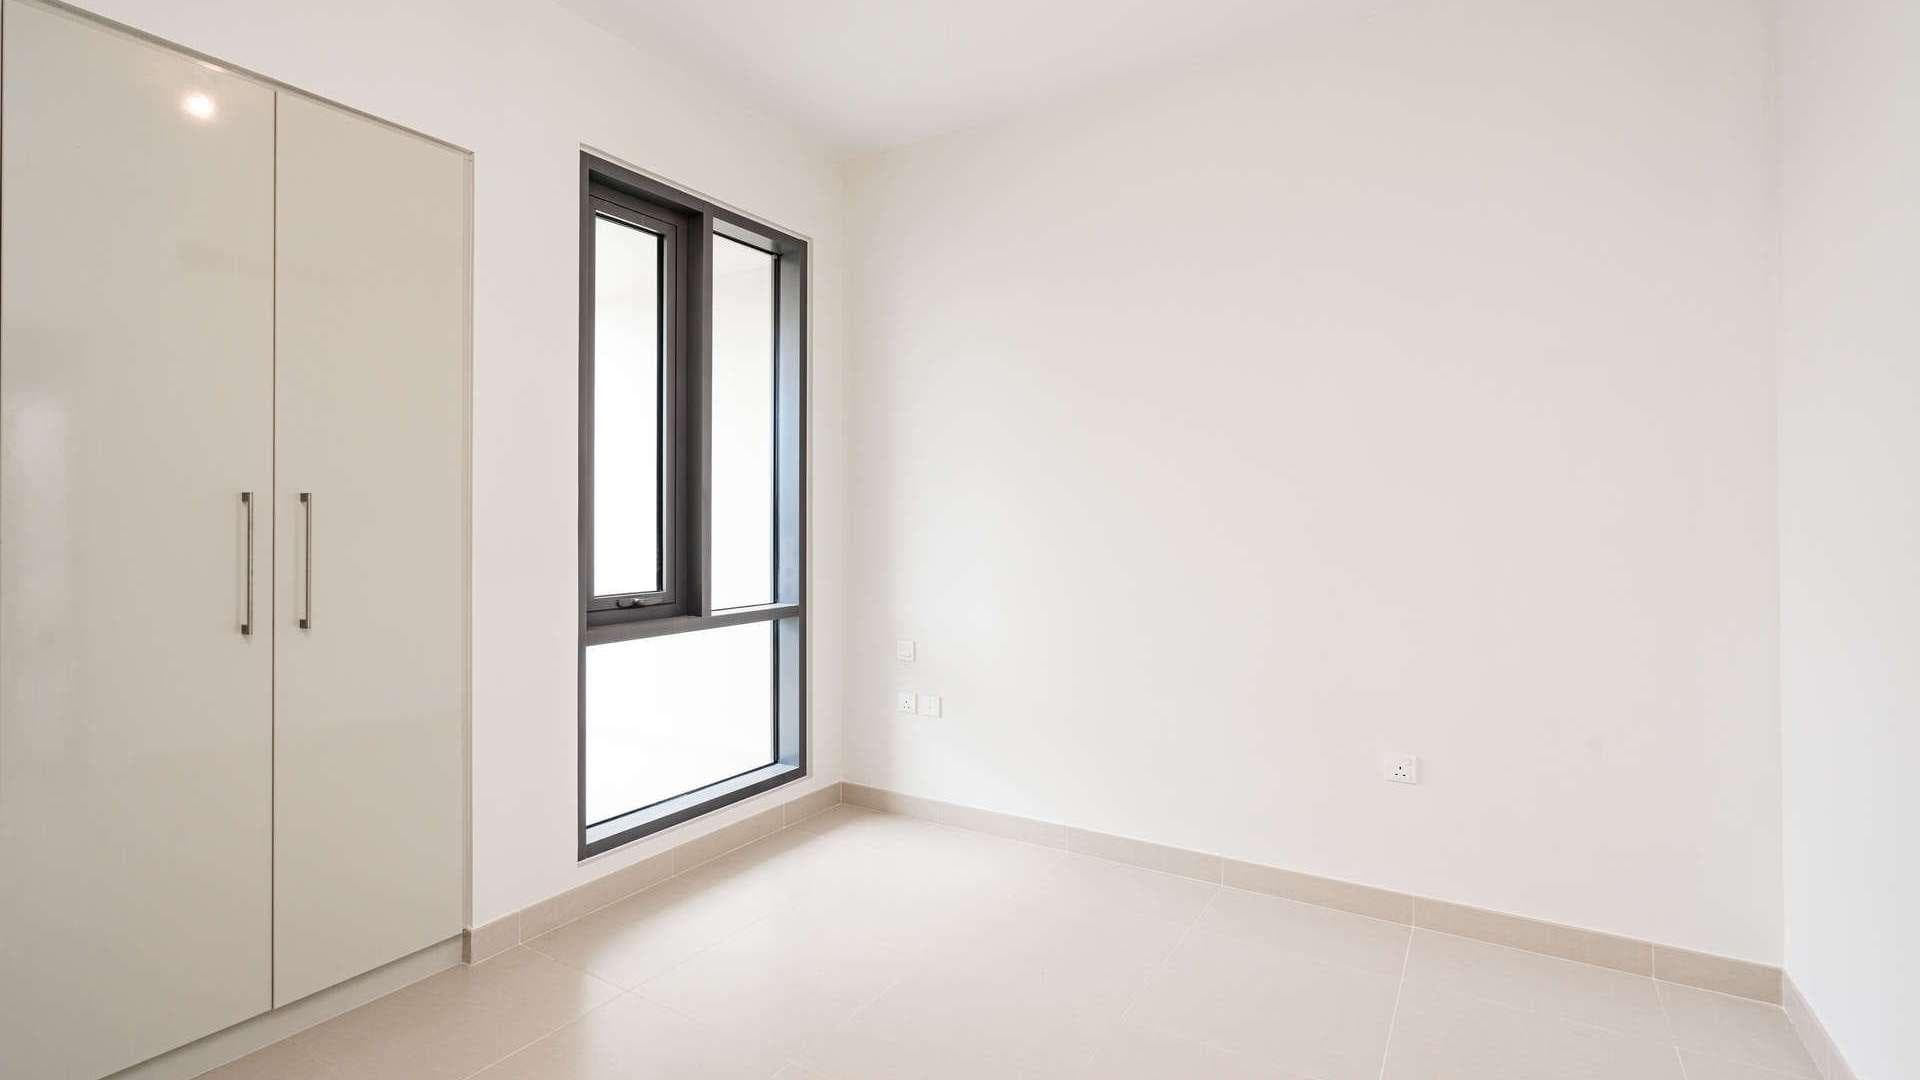 4 Bedroom Apartment For Rent Maple At Dubai Hills Estate Lp18257 1b53397e6f3e8f0.jpg